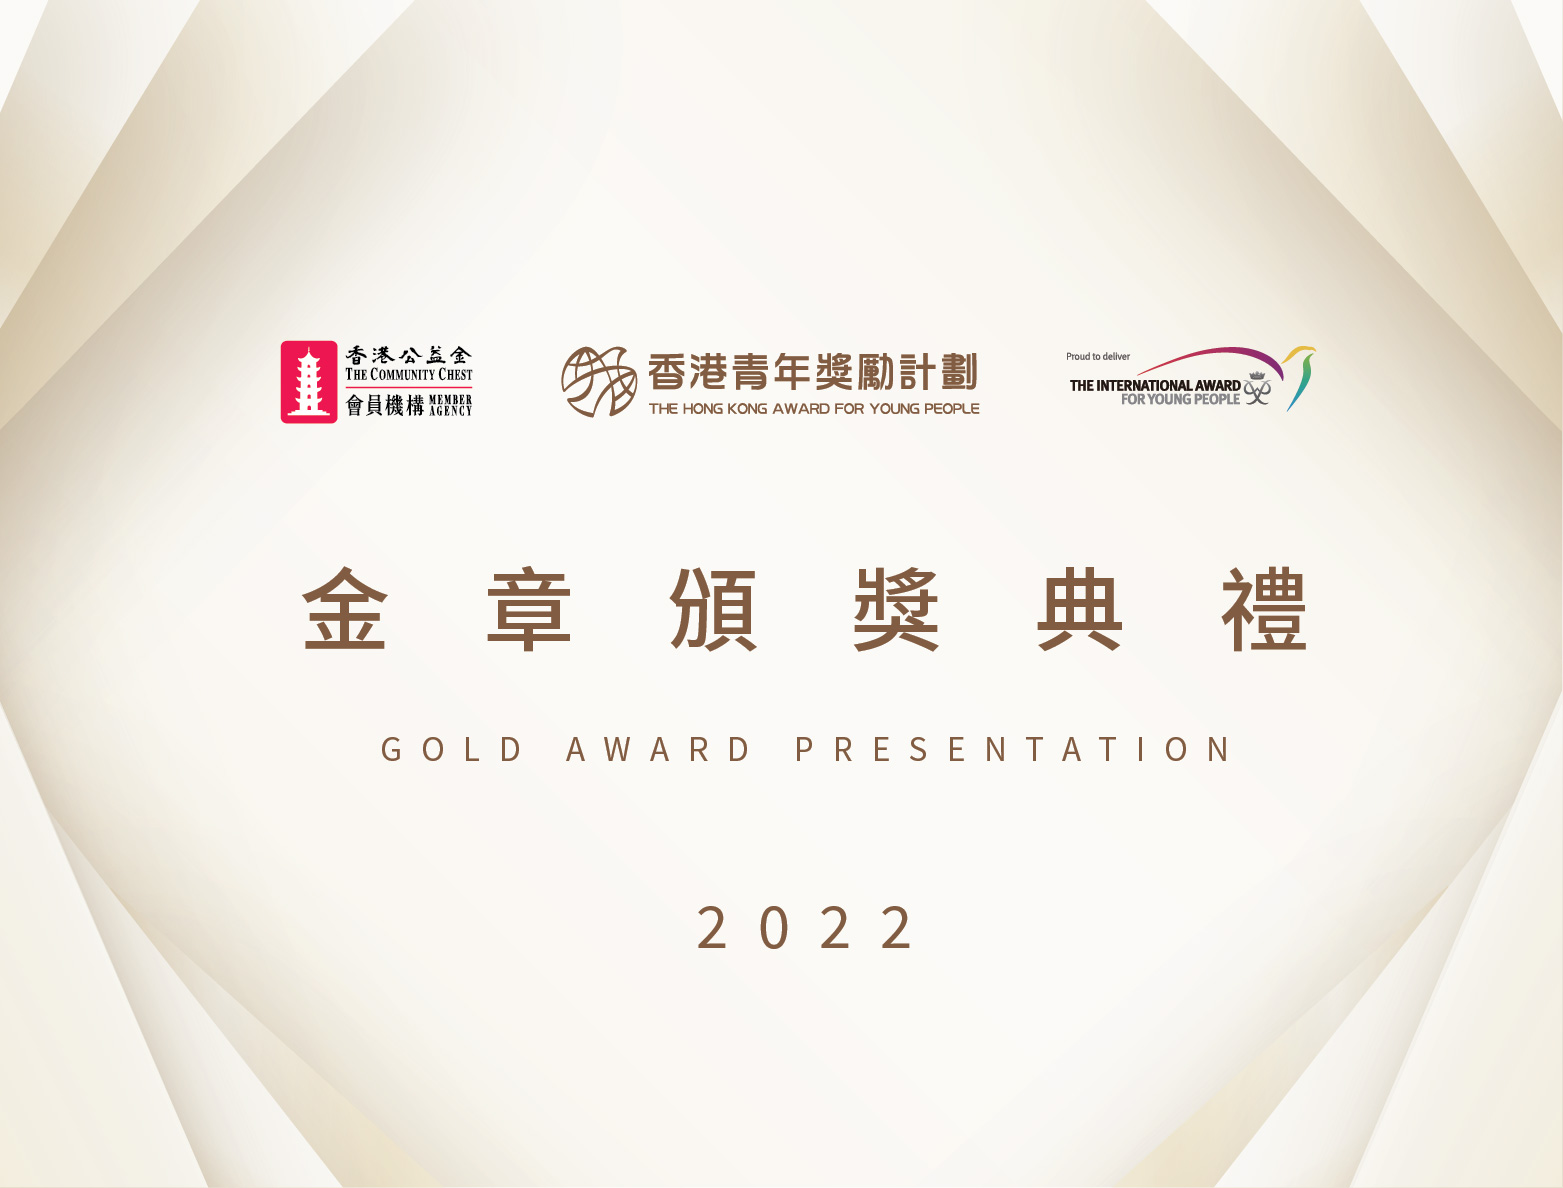 December 2022: The Gold Award Presentation 2022